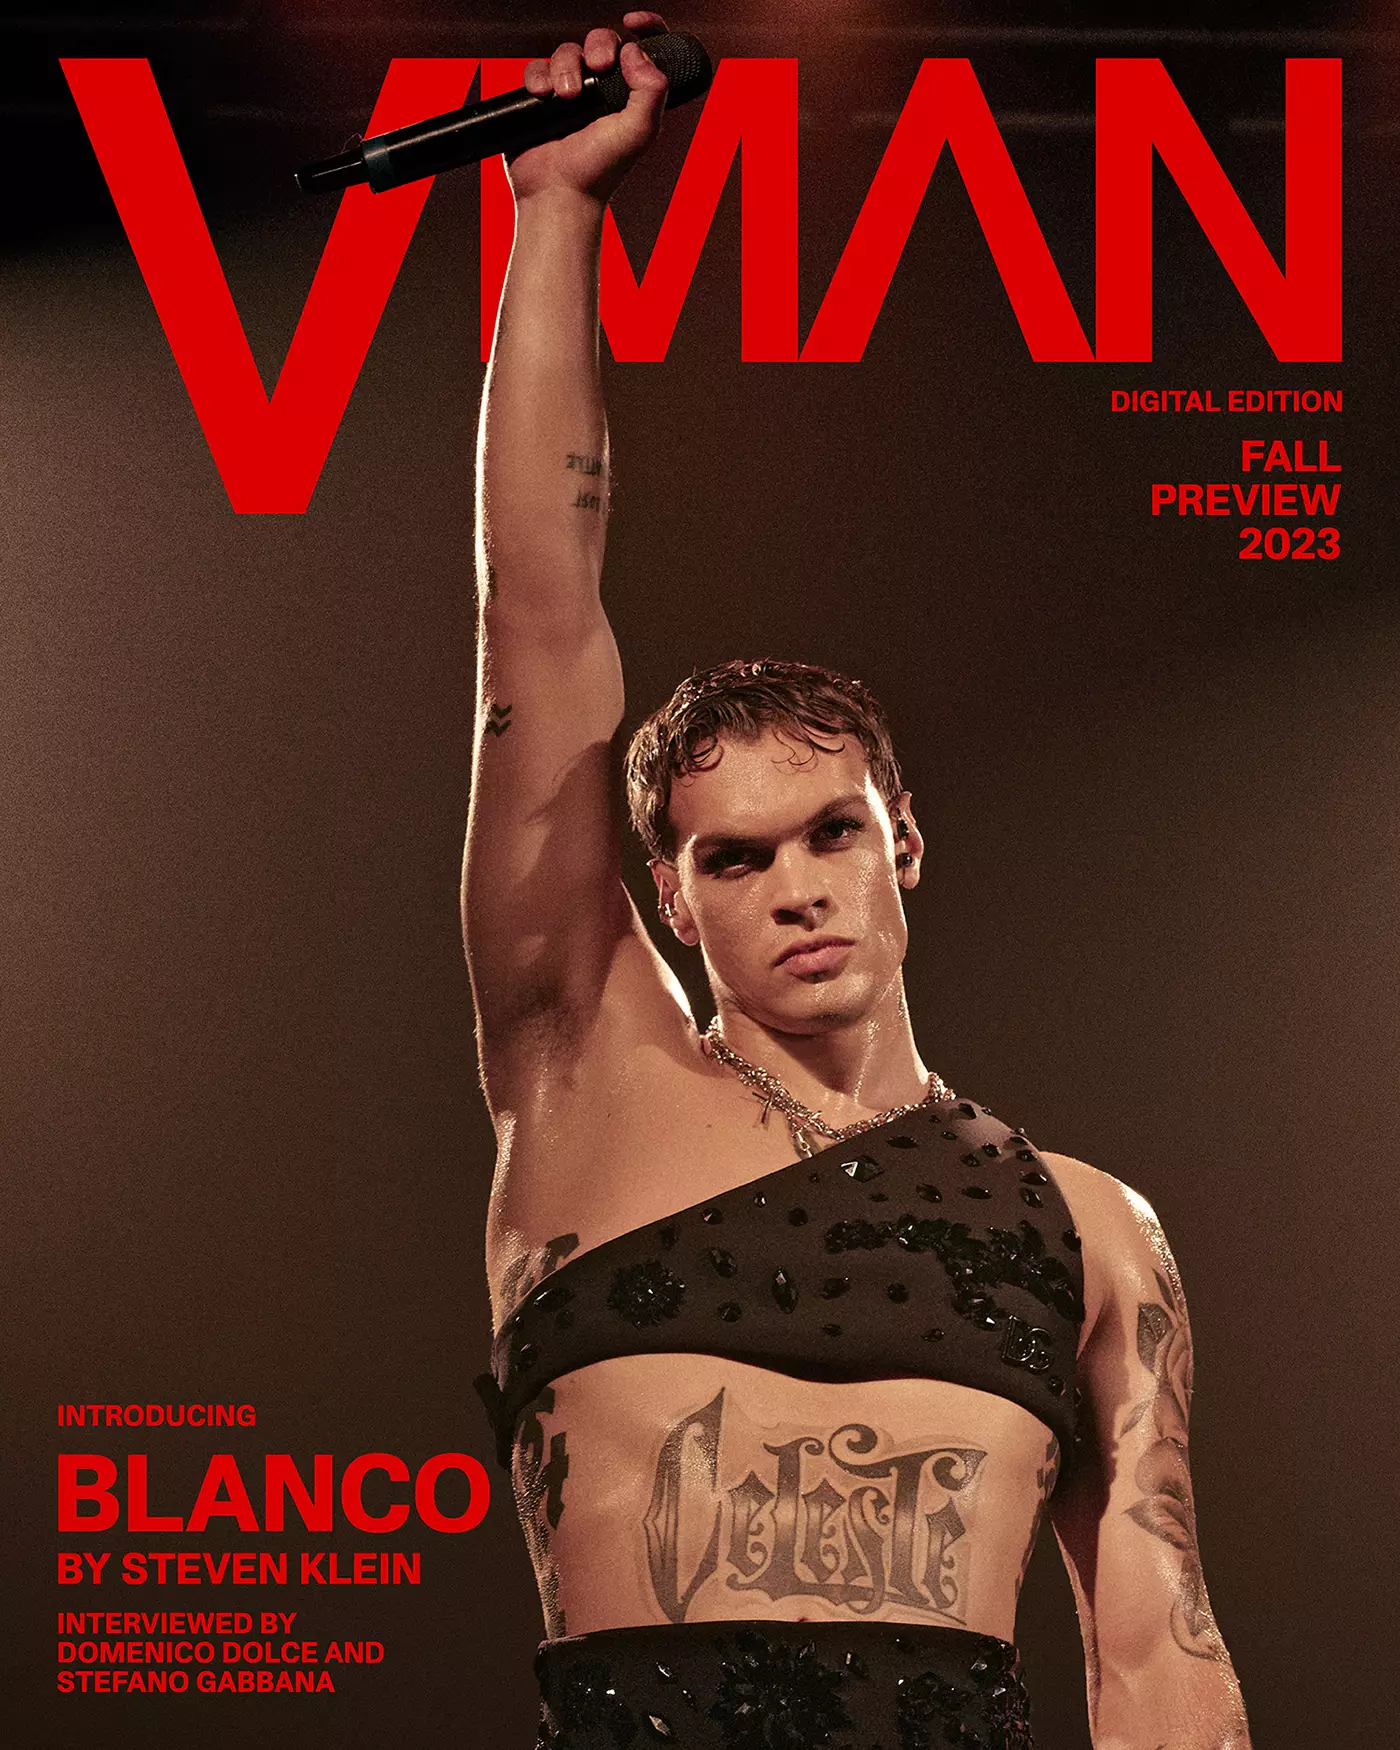 Blanco's Unyielding Charisma Illuminated in Digital VMAN Cover